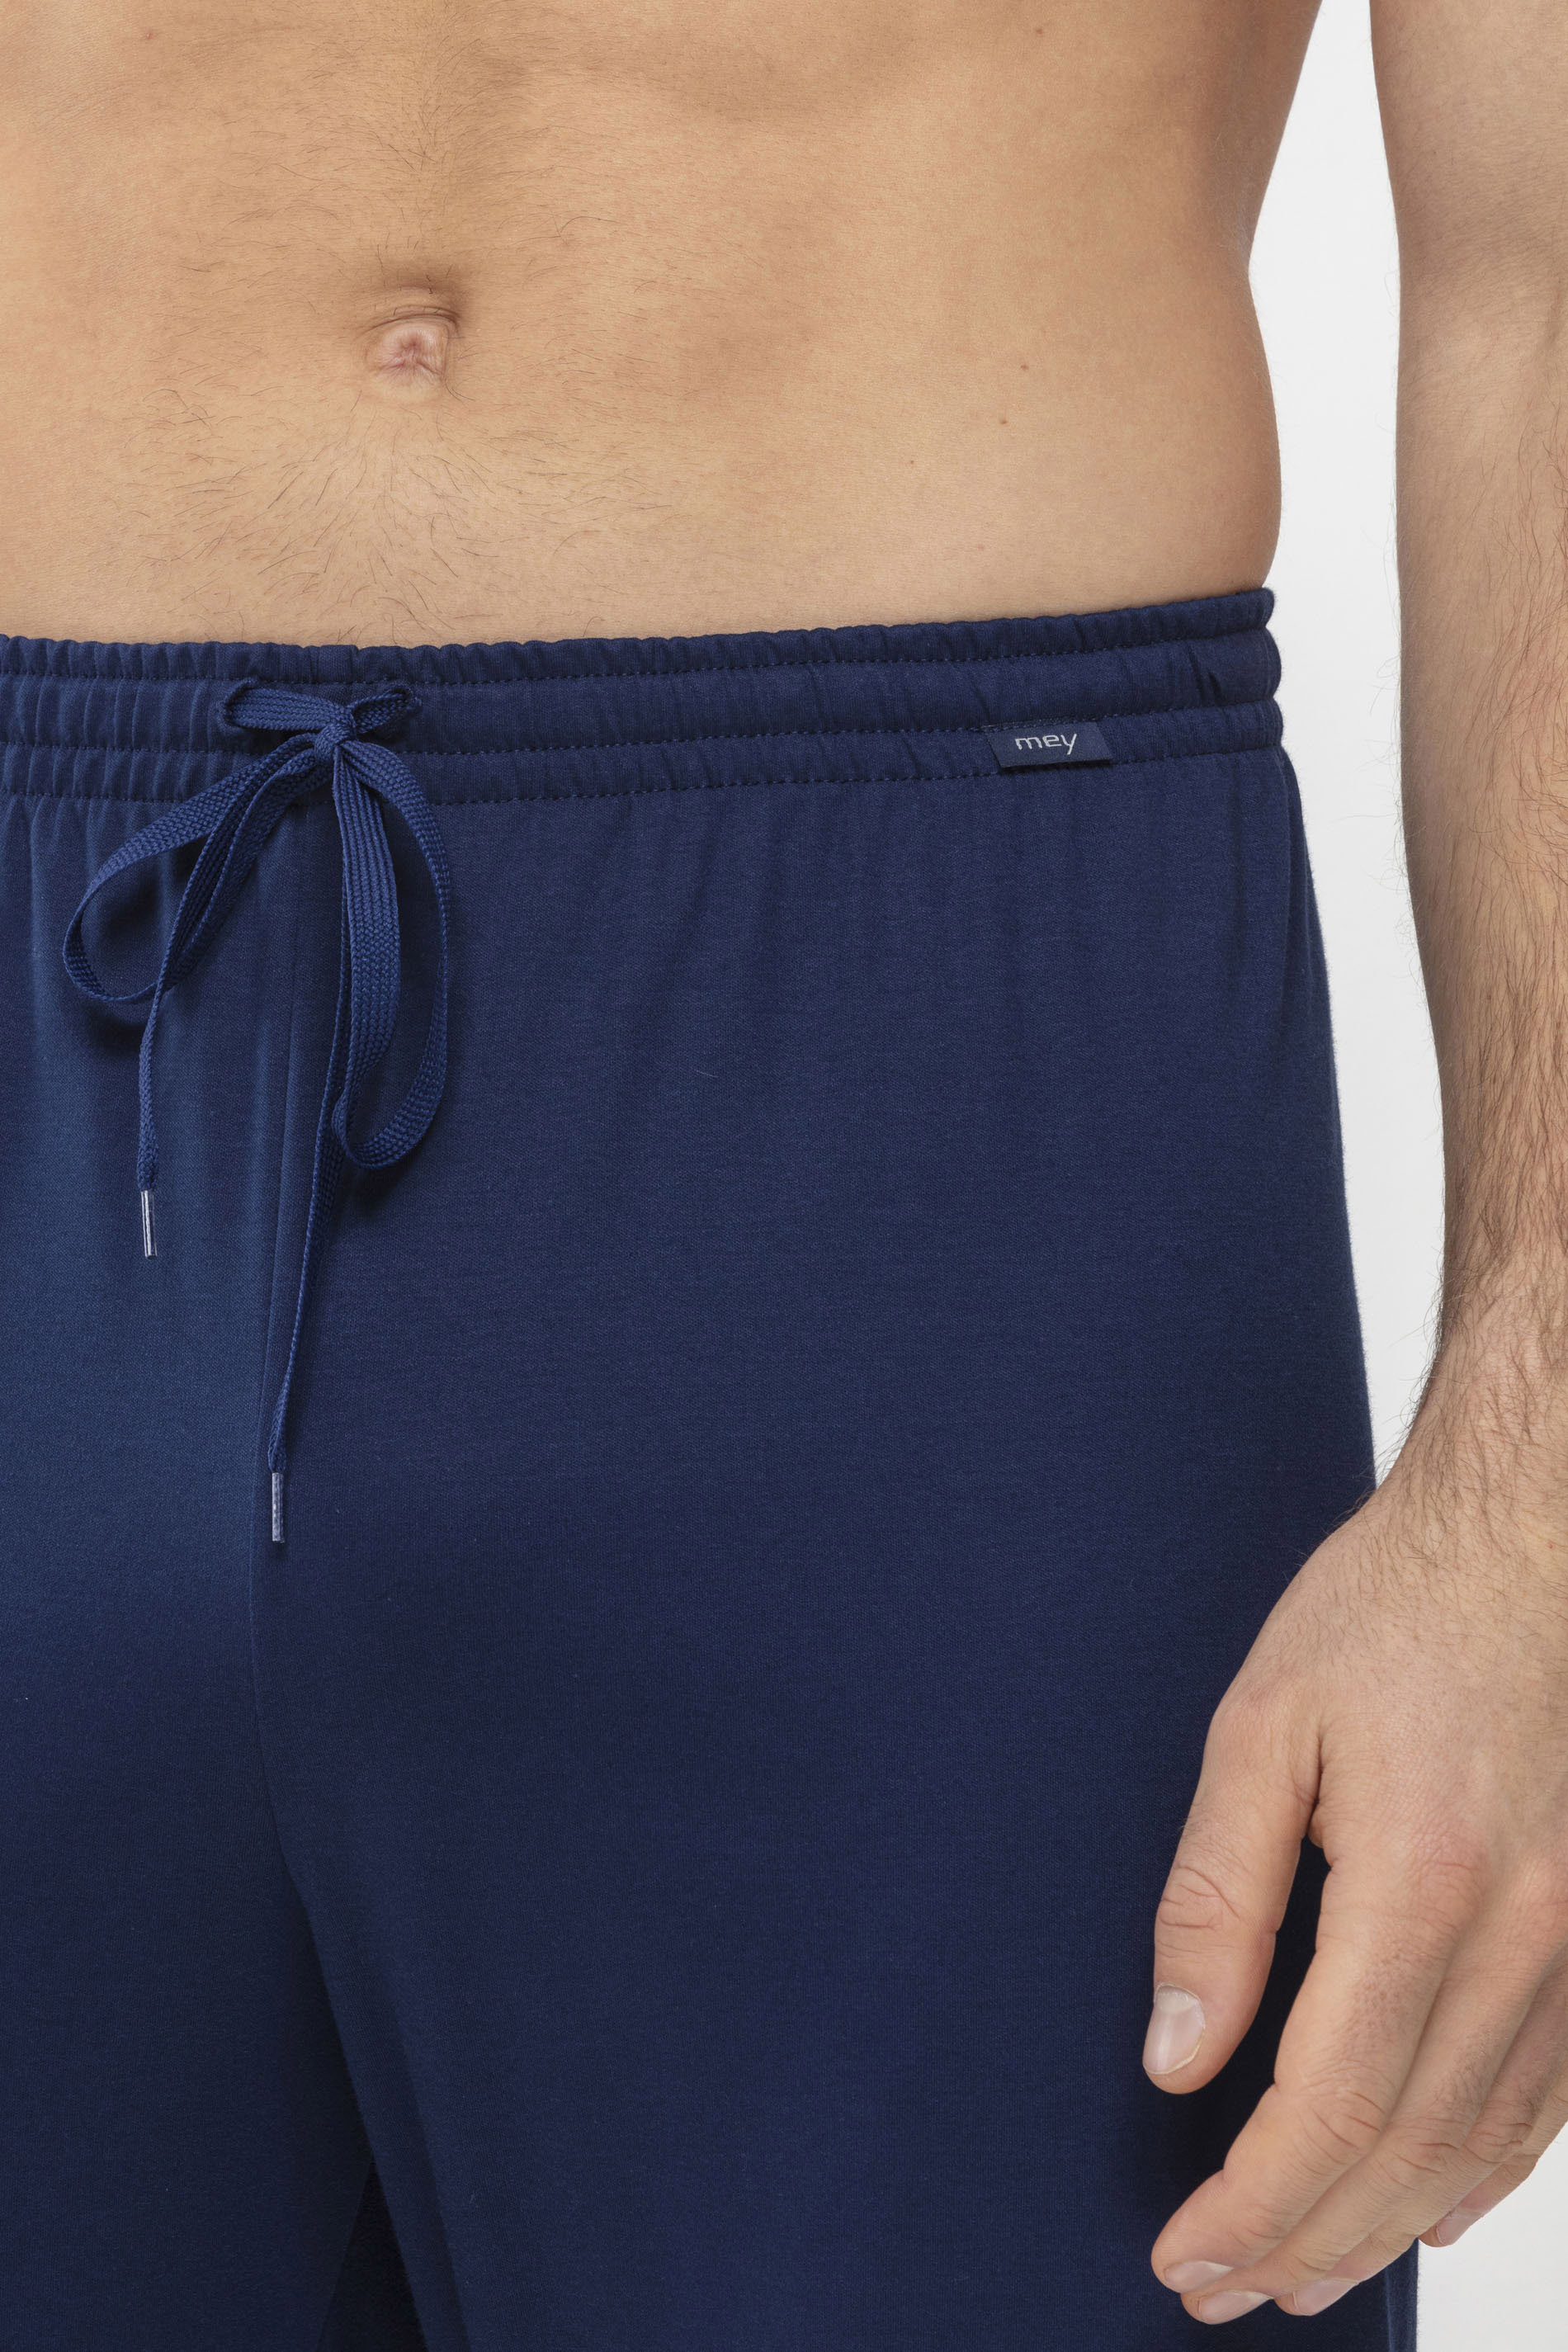 Long trousers Neptune Serie Melton Detail View 01 | mey®